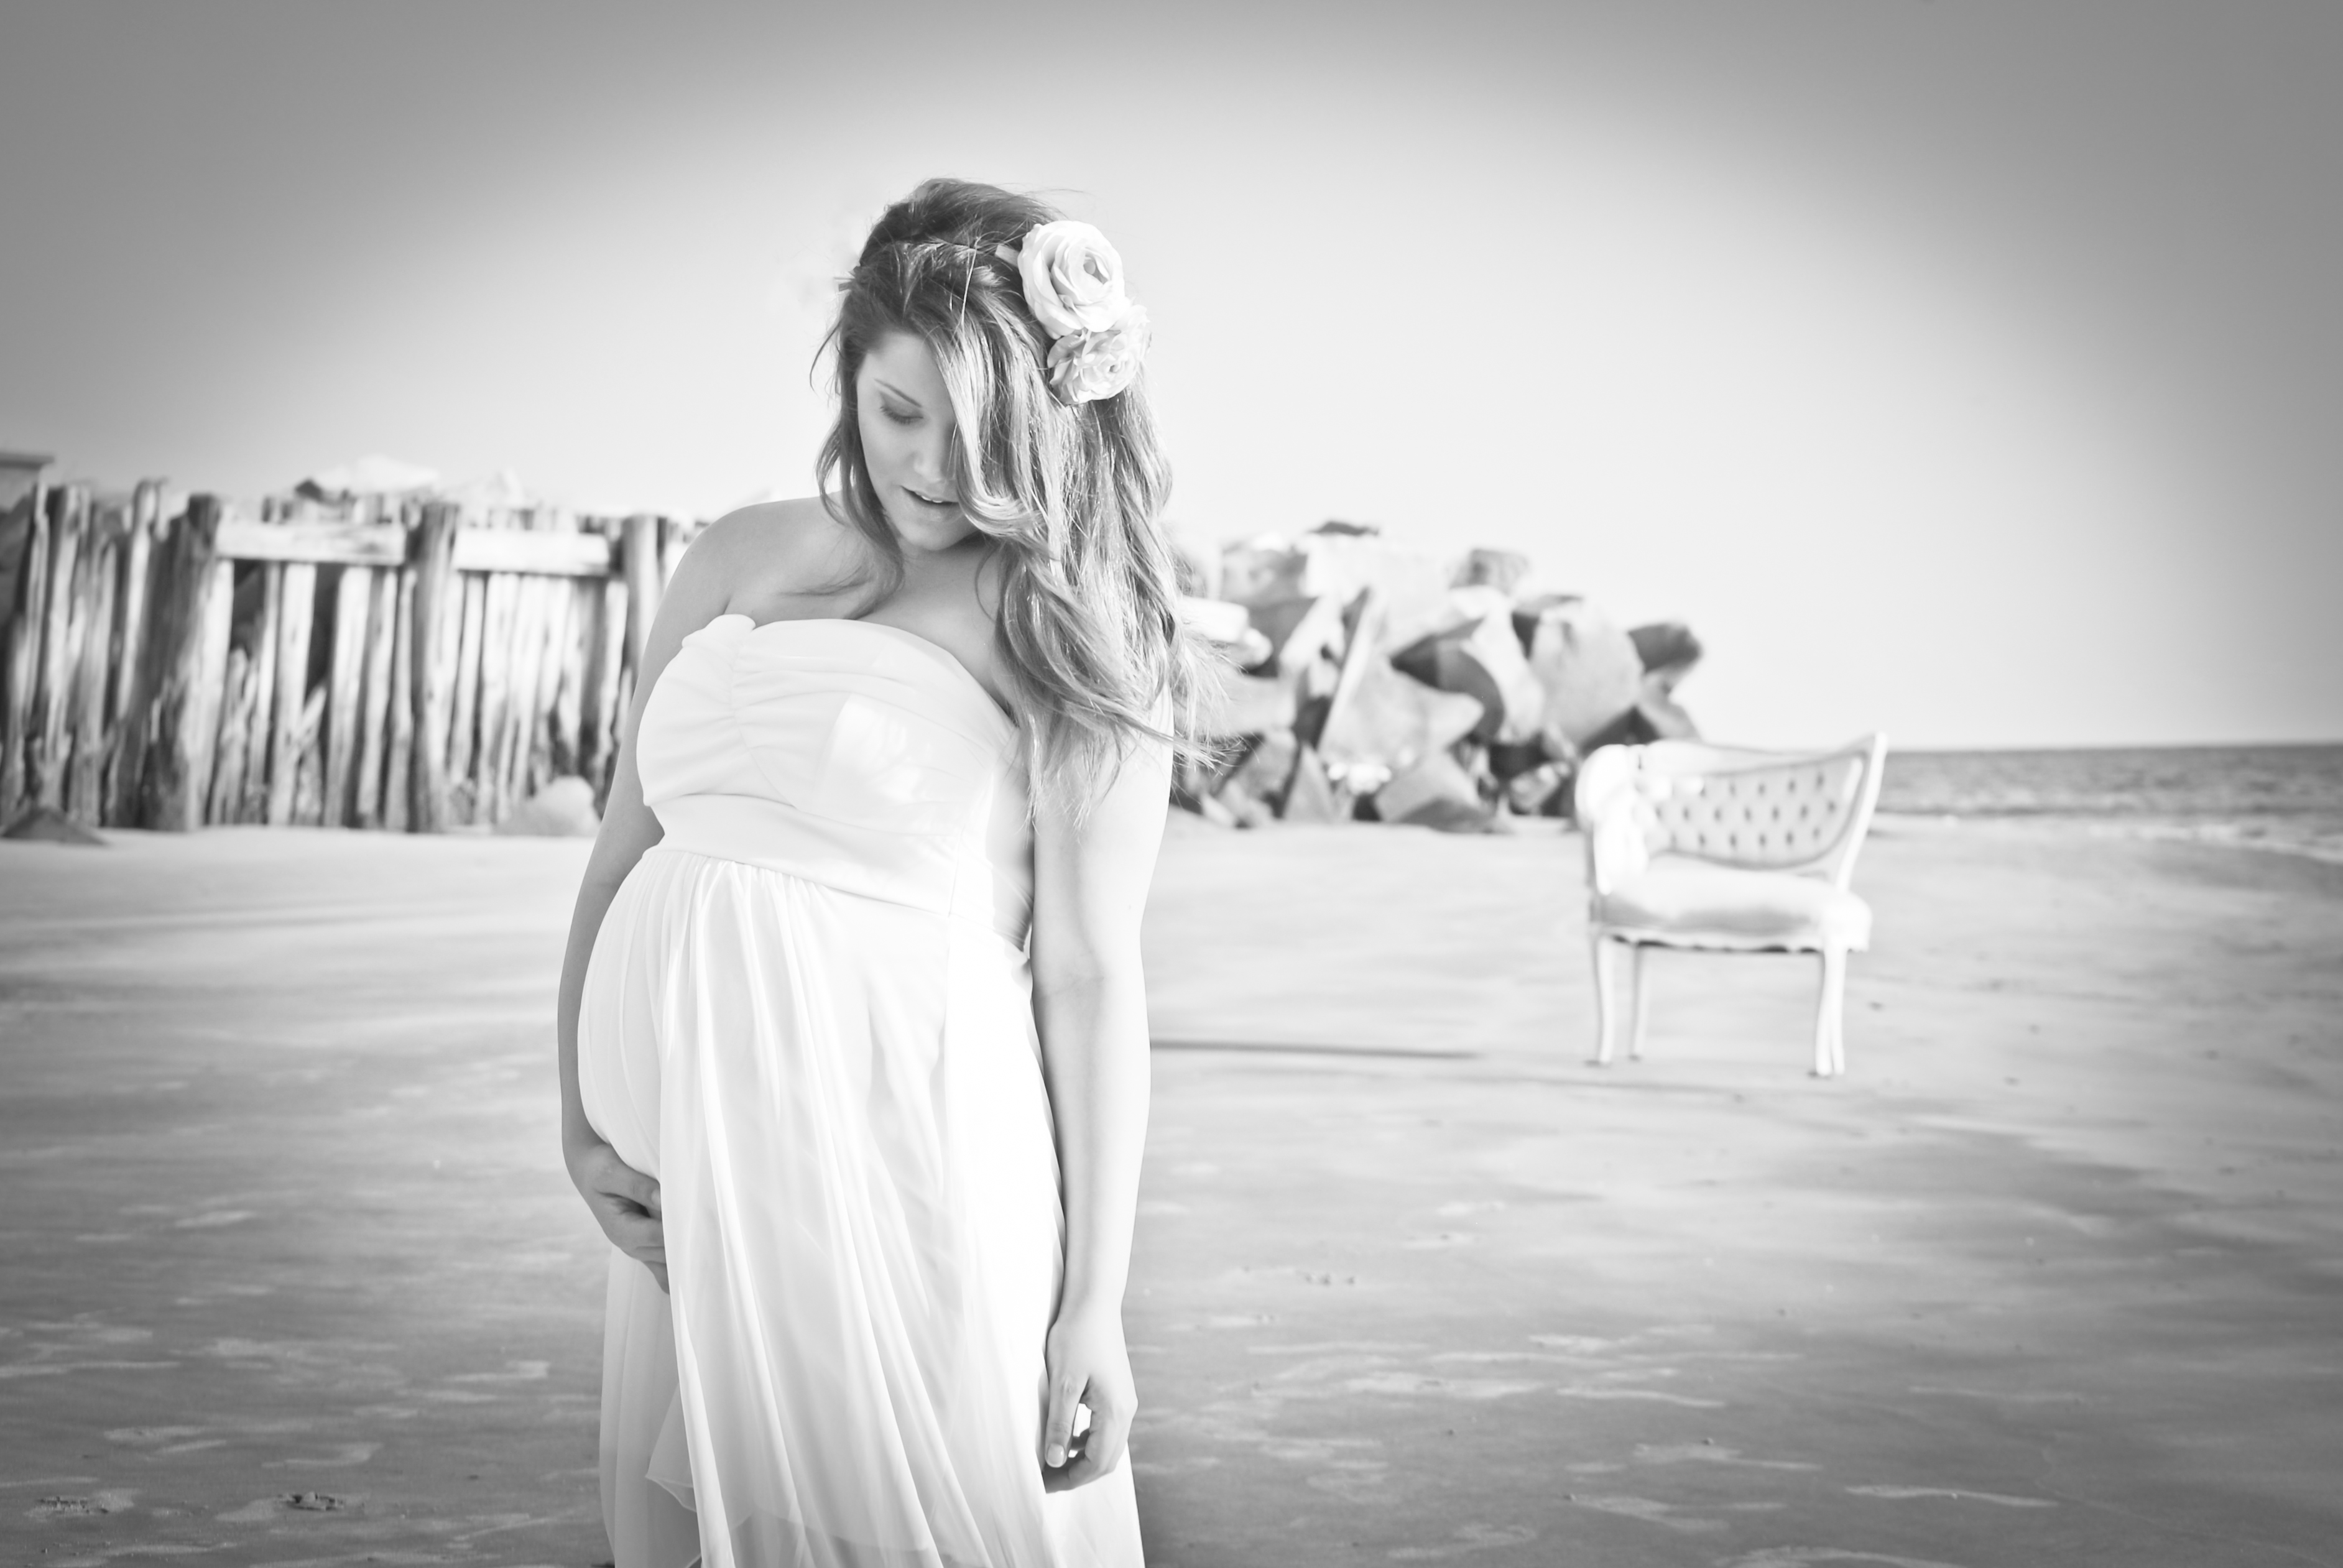 Sullivans Island Maternity shoot